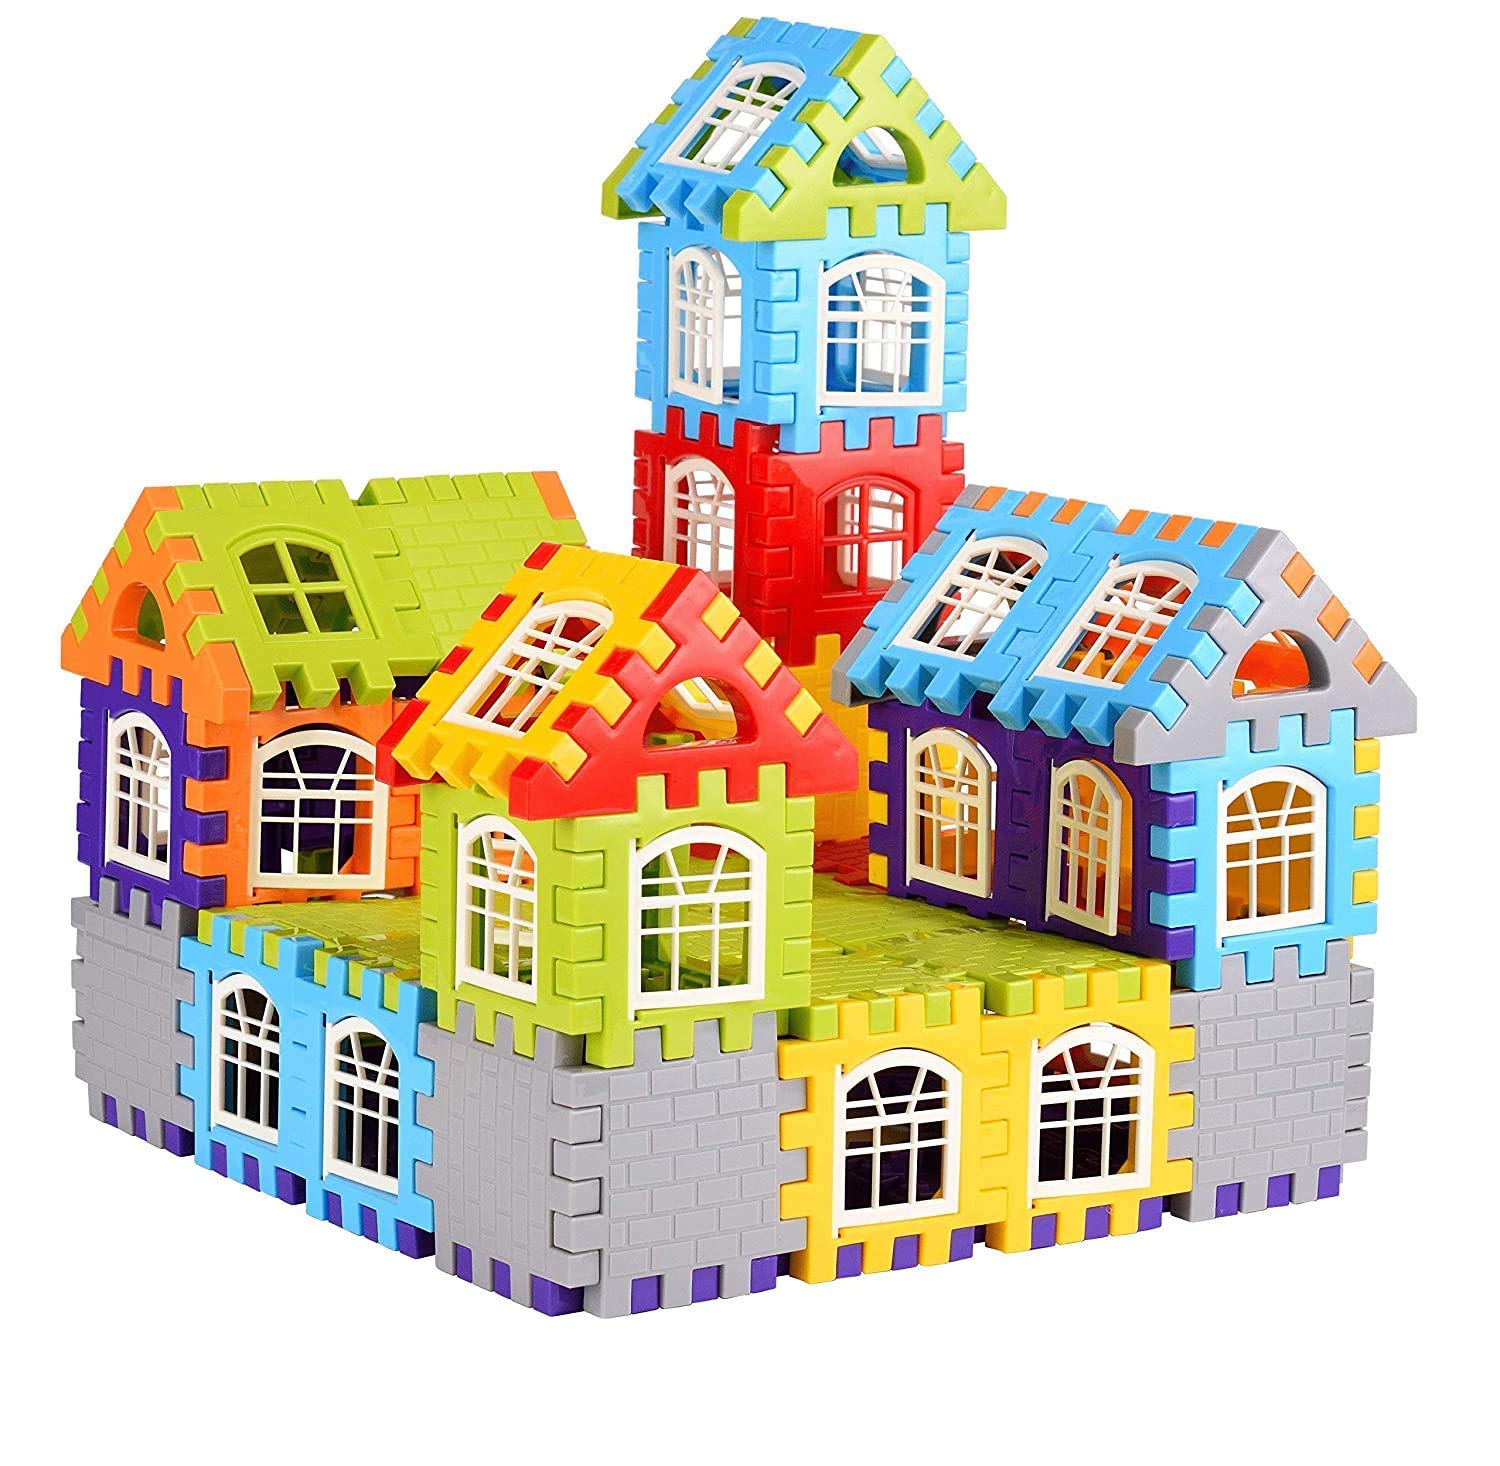 House Building Blocks - Home Essentials Store Retail